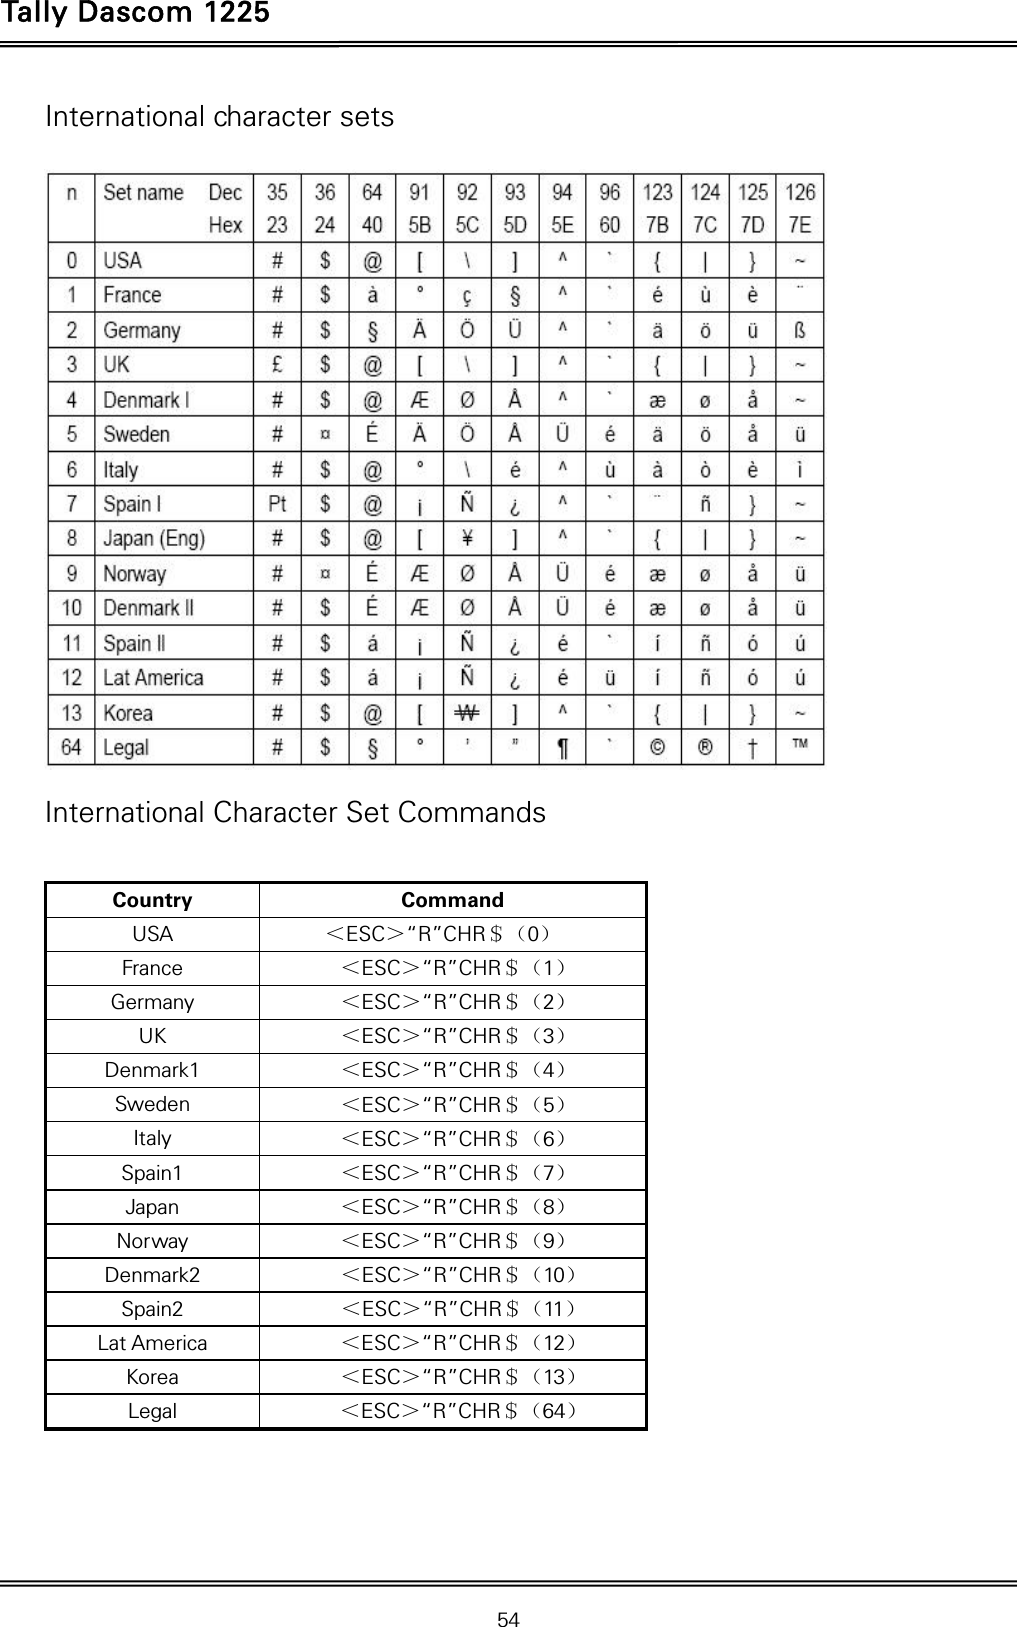 Tally Dascom 1225   54  International character sets     International Character Set Commands  Country Command USA  ＜ESC＞“R”CHR＄（0） France   ＜ESC＞“R”CHR＄（1） Germany   ＜ESC＞“R”CHR＄（2） UK   ＜ESC＞“R”CHR＄（3） Denmark1   ＜ESC＞“R”CHR＄（4） Sweden   ＜ESC＞“R”CHR＄（5） Italy   ＜ESC＞“R”CHR＄（6） Spain1   ＜ESC＞“R”CHR＄（7） Japan   ＜ESC＞“R”CHR＄（8） Norway   ＜ESC＞“R”CHR＄（9） Denmark2    ＜ESC＞“R”CHR＄（10） Spain2    ＜ESC＞“R”CHR＄（11） Lat America    ＜ESC＞“R”CHR＄（12） Korea    ＜ESC＞“R”CHR＄（13） Legal    ＜ESC＞“R”CHR＄（64）    